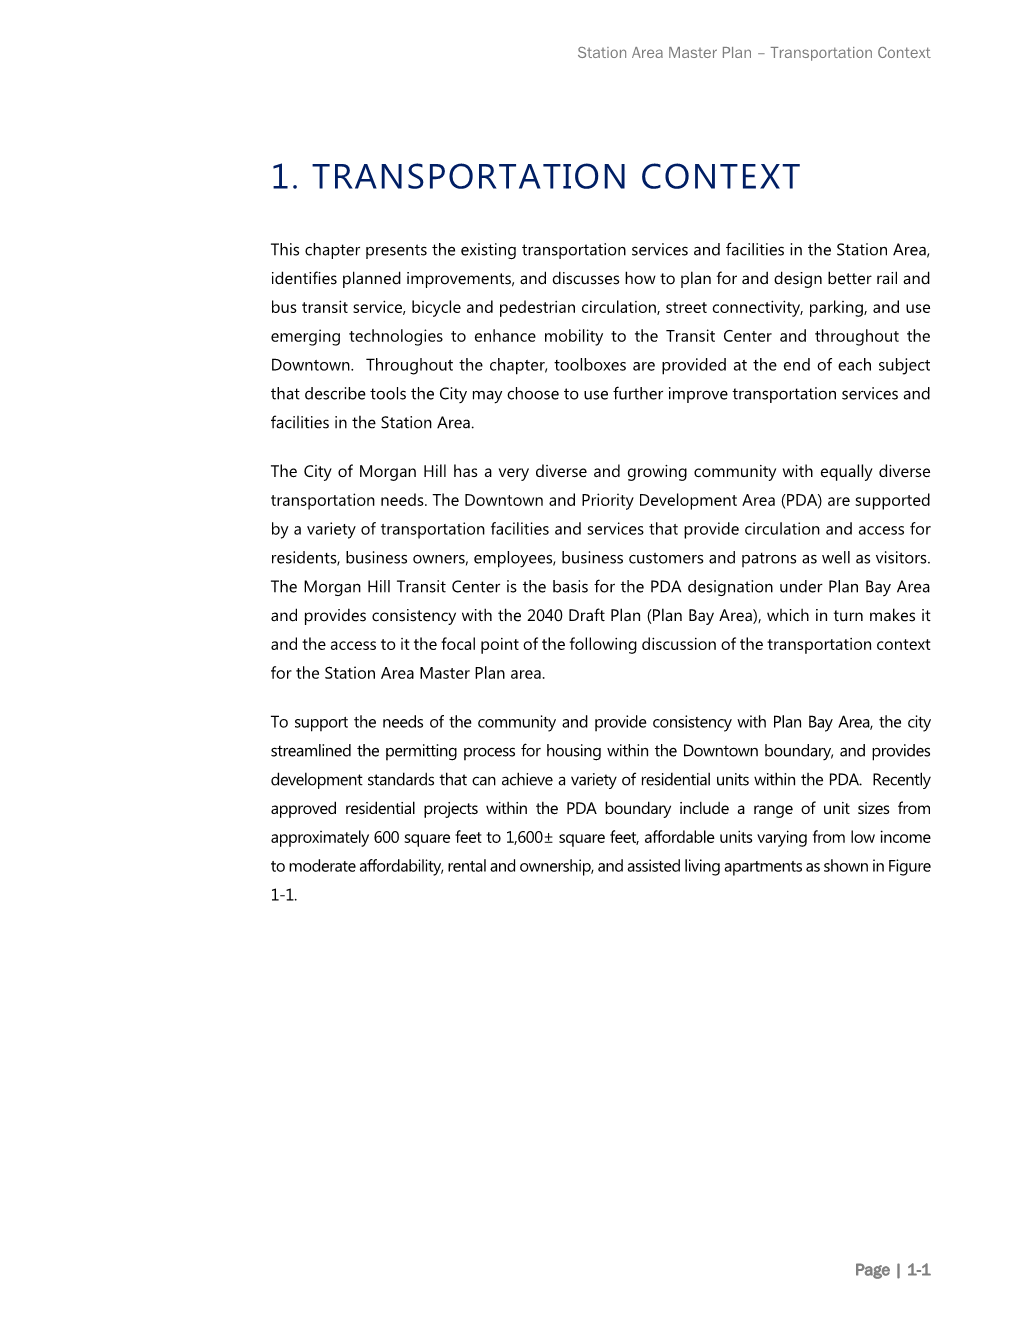 1. Transportation Context